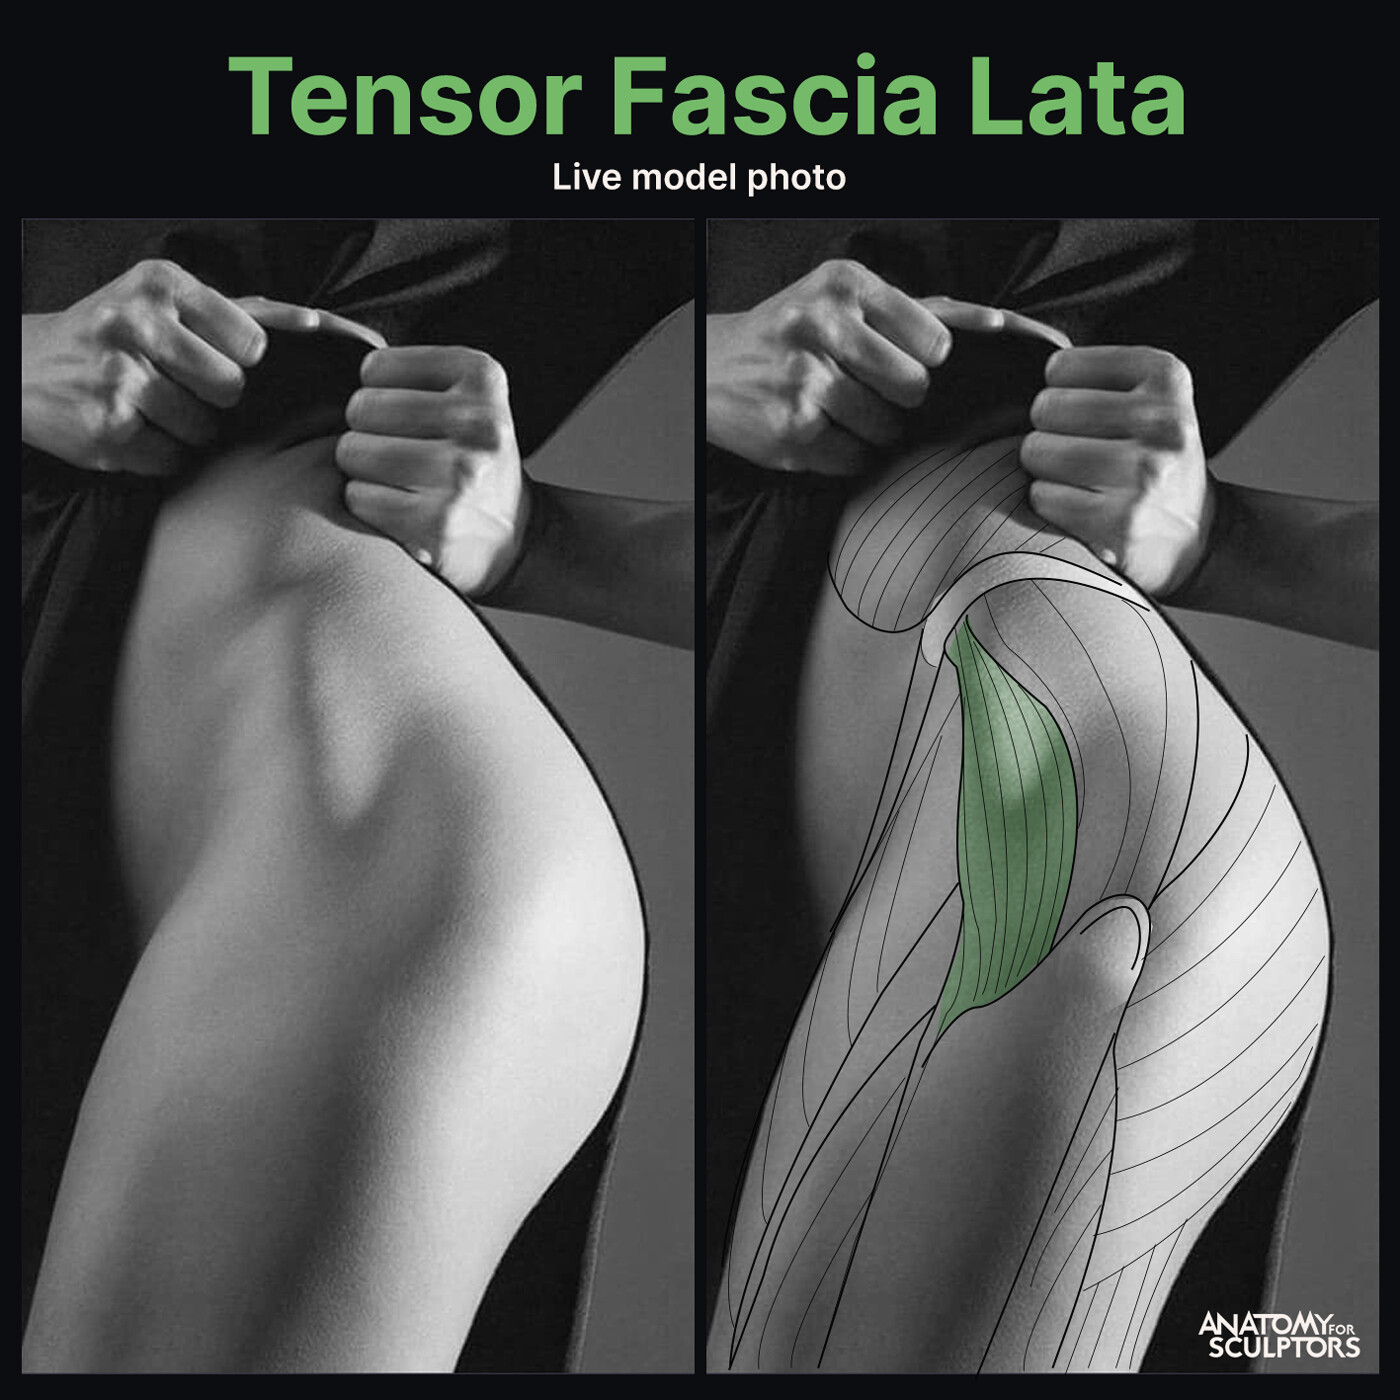 Anatomy For Sculptors - Tensor Fascia Lata